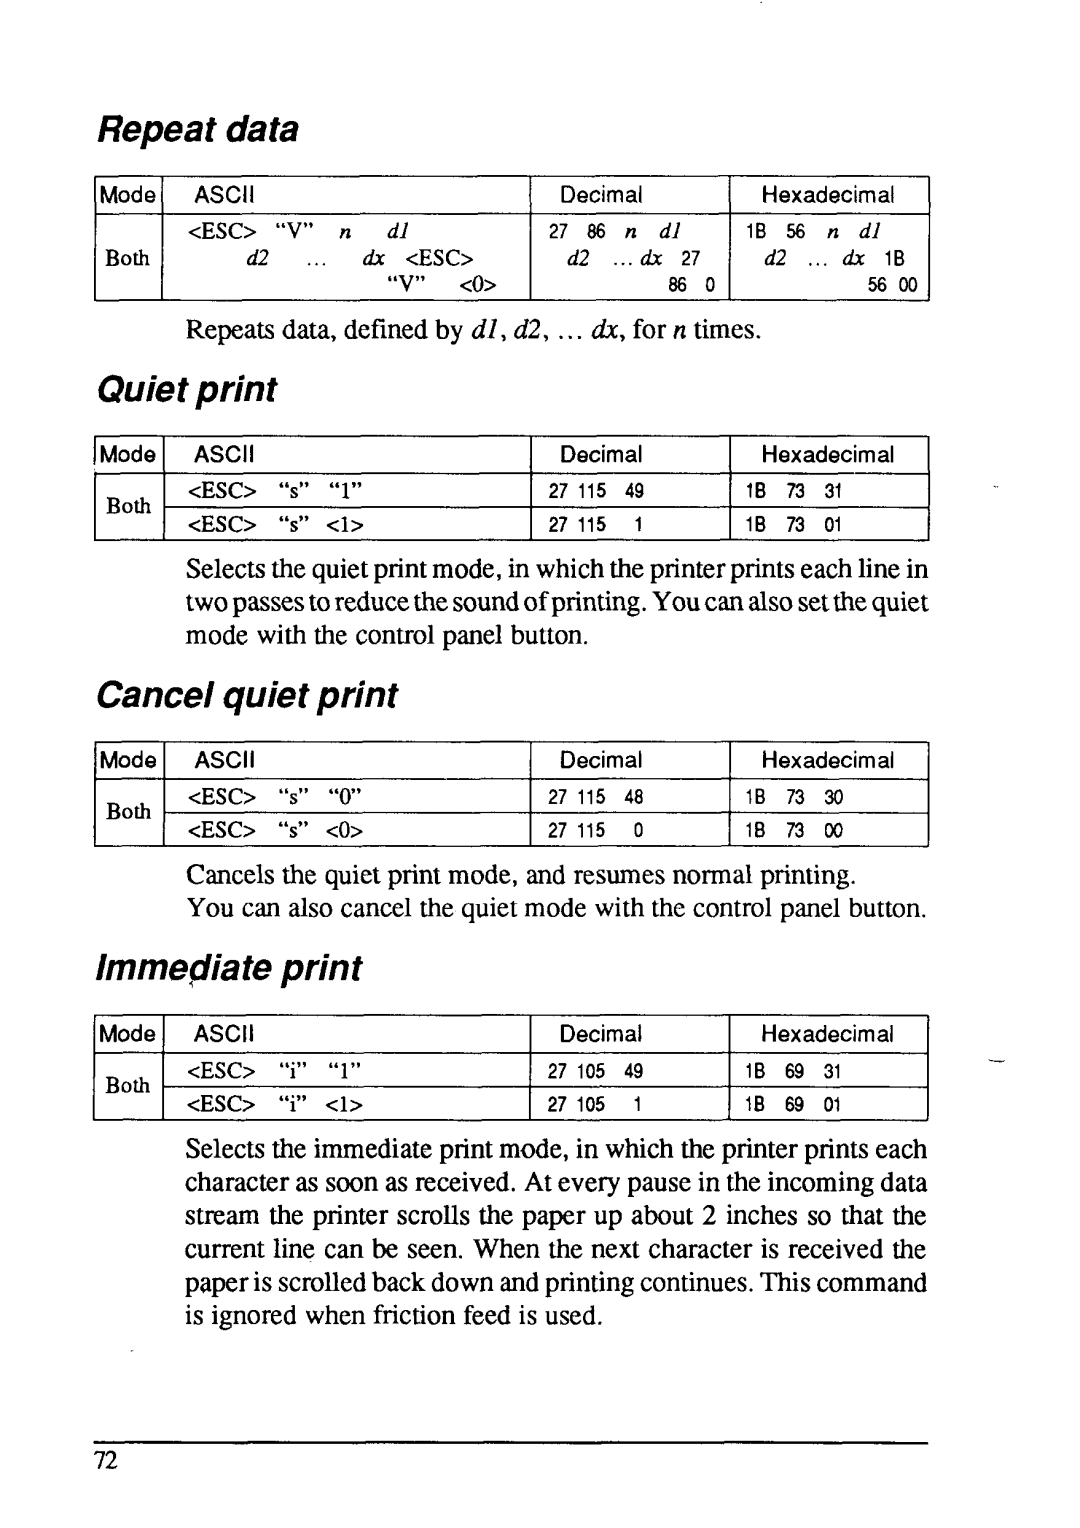 Star Micronics LC24-15 user manual Repeat data, Quiet print, Cancel quiet print, ImmefBa te print 